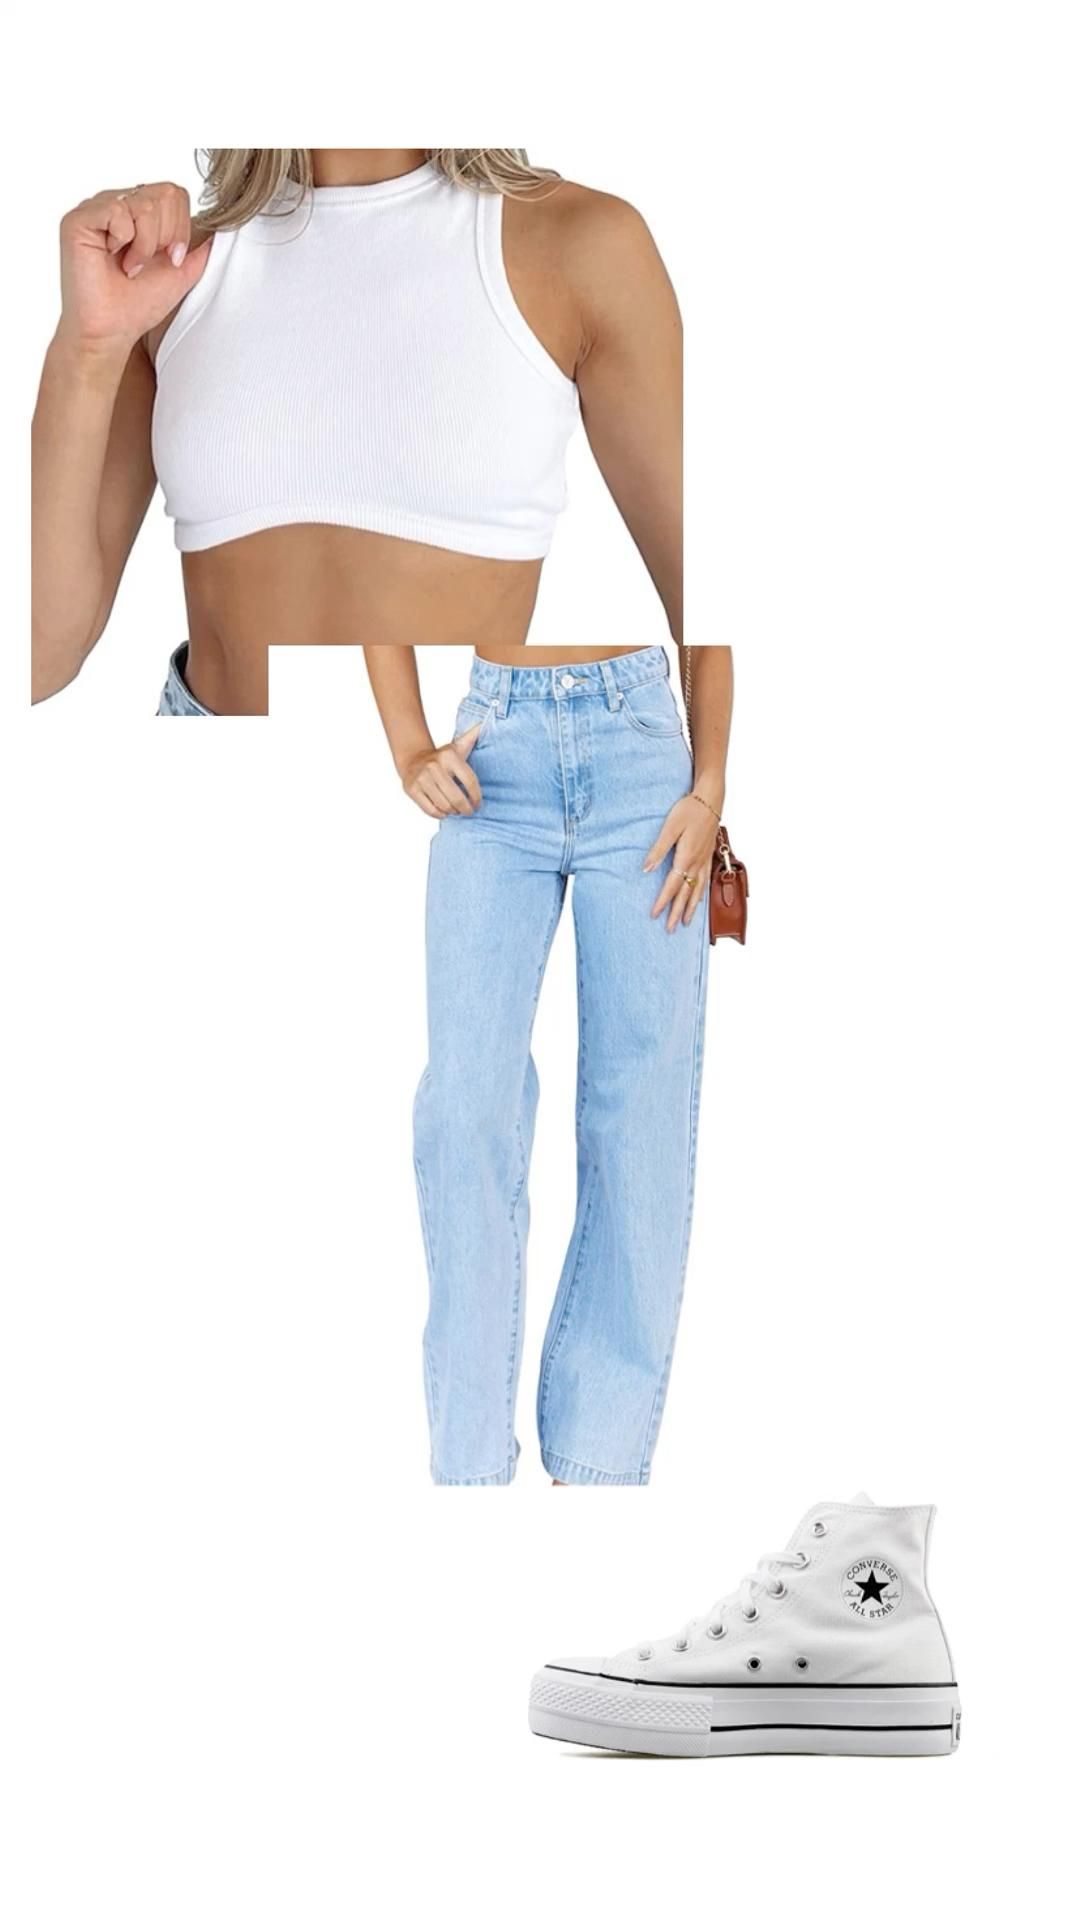 Baggy Boyfriend Jeans Outfit
  Ideas for Women